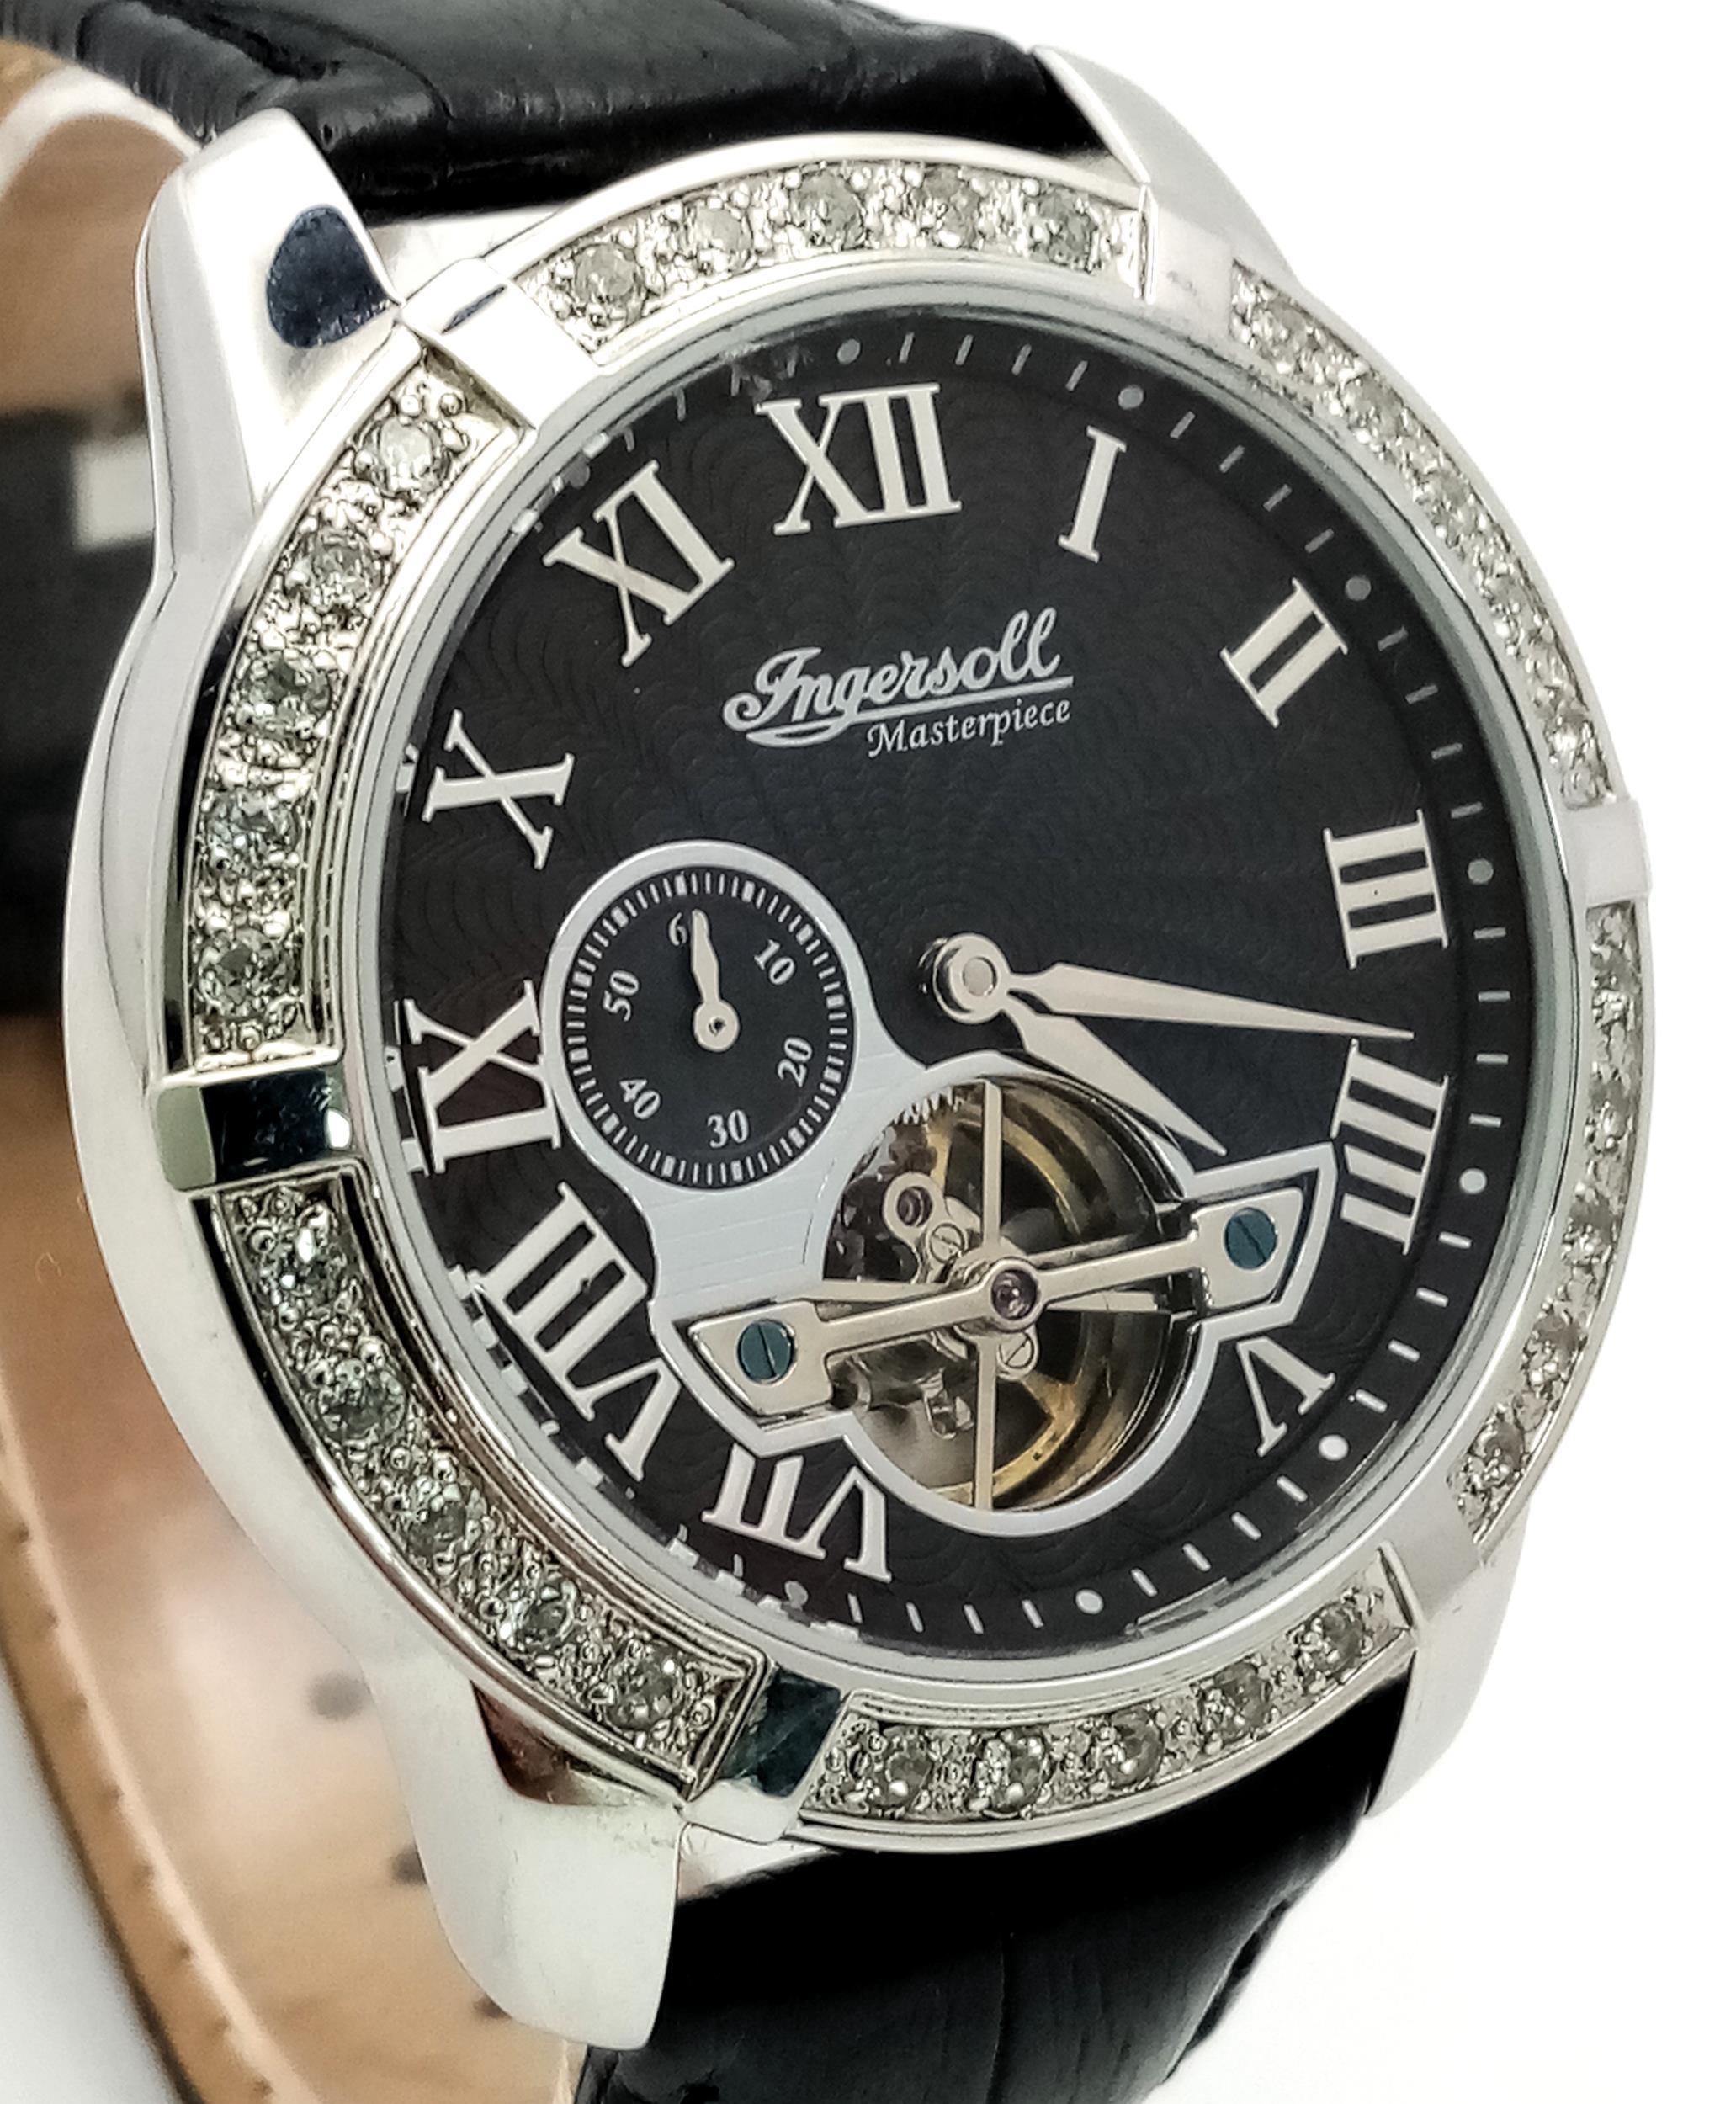 An Ingersoll Masterpiece Skeleton Gents Automatic Watch. Black leather strap. Stainless steel case - - Bild 4 aus 5